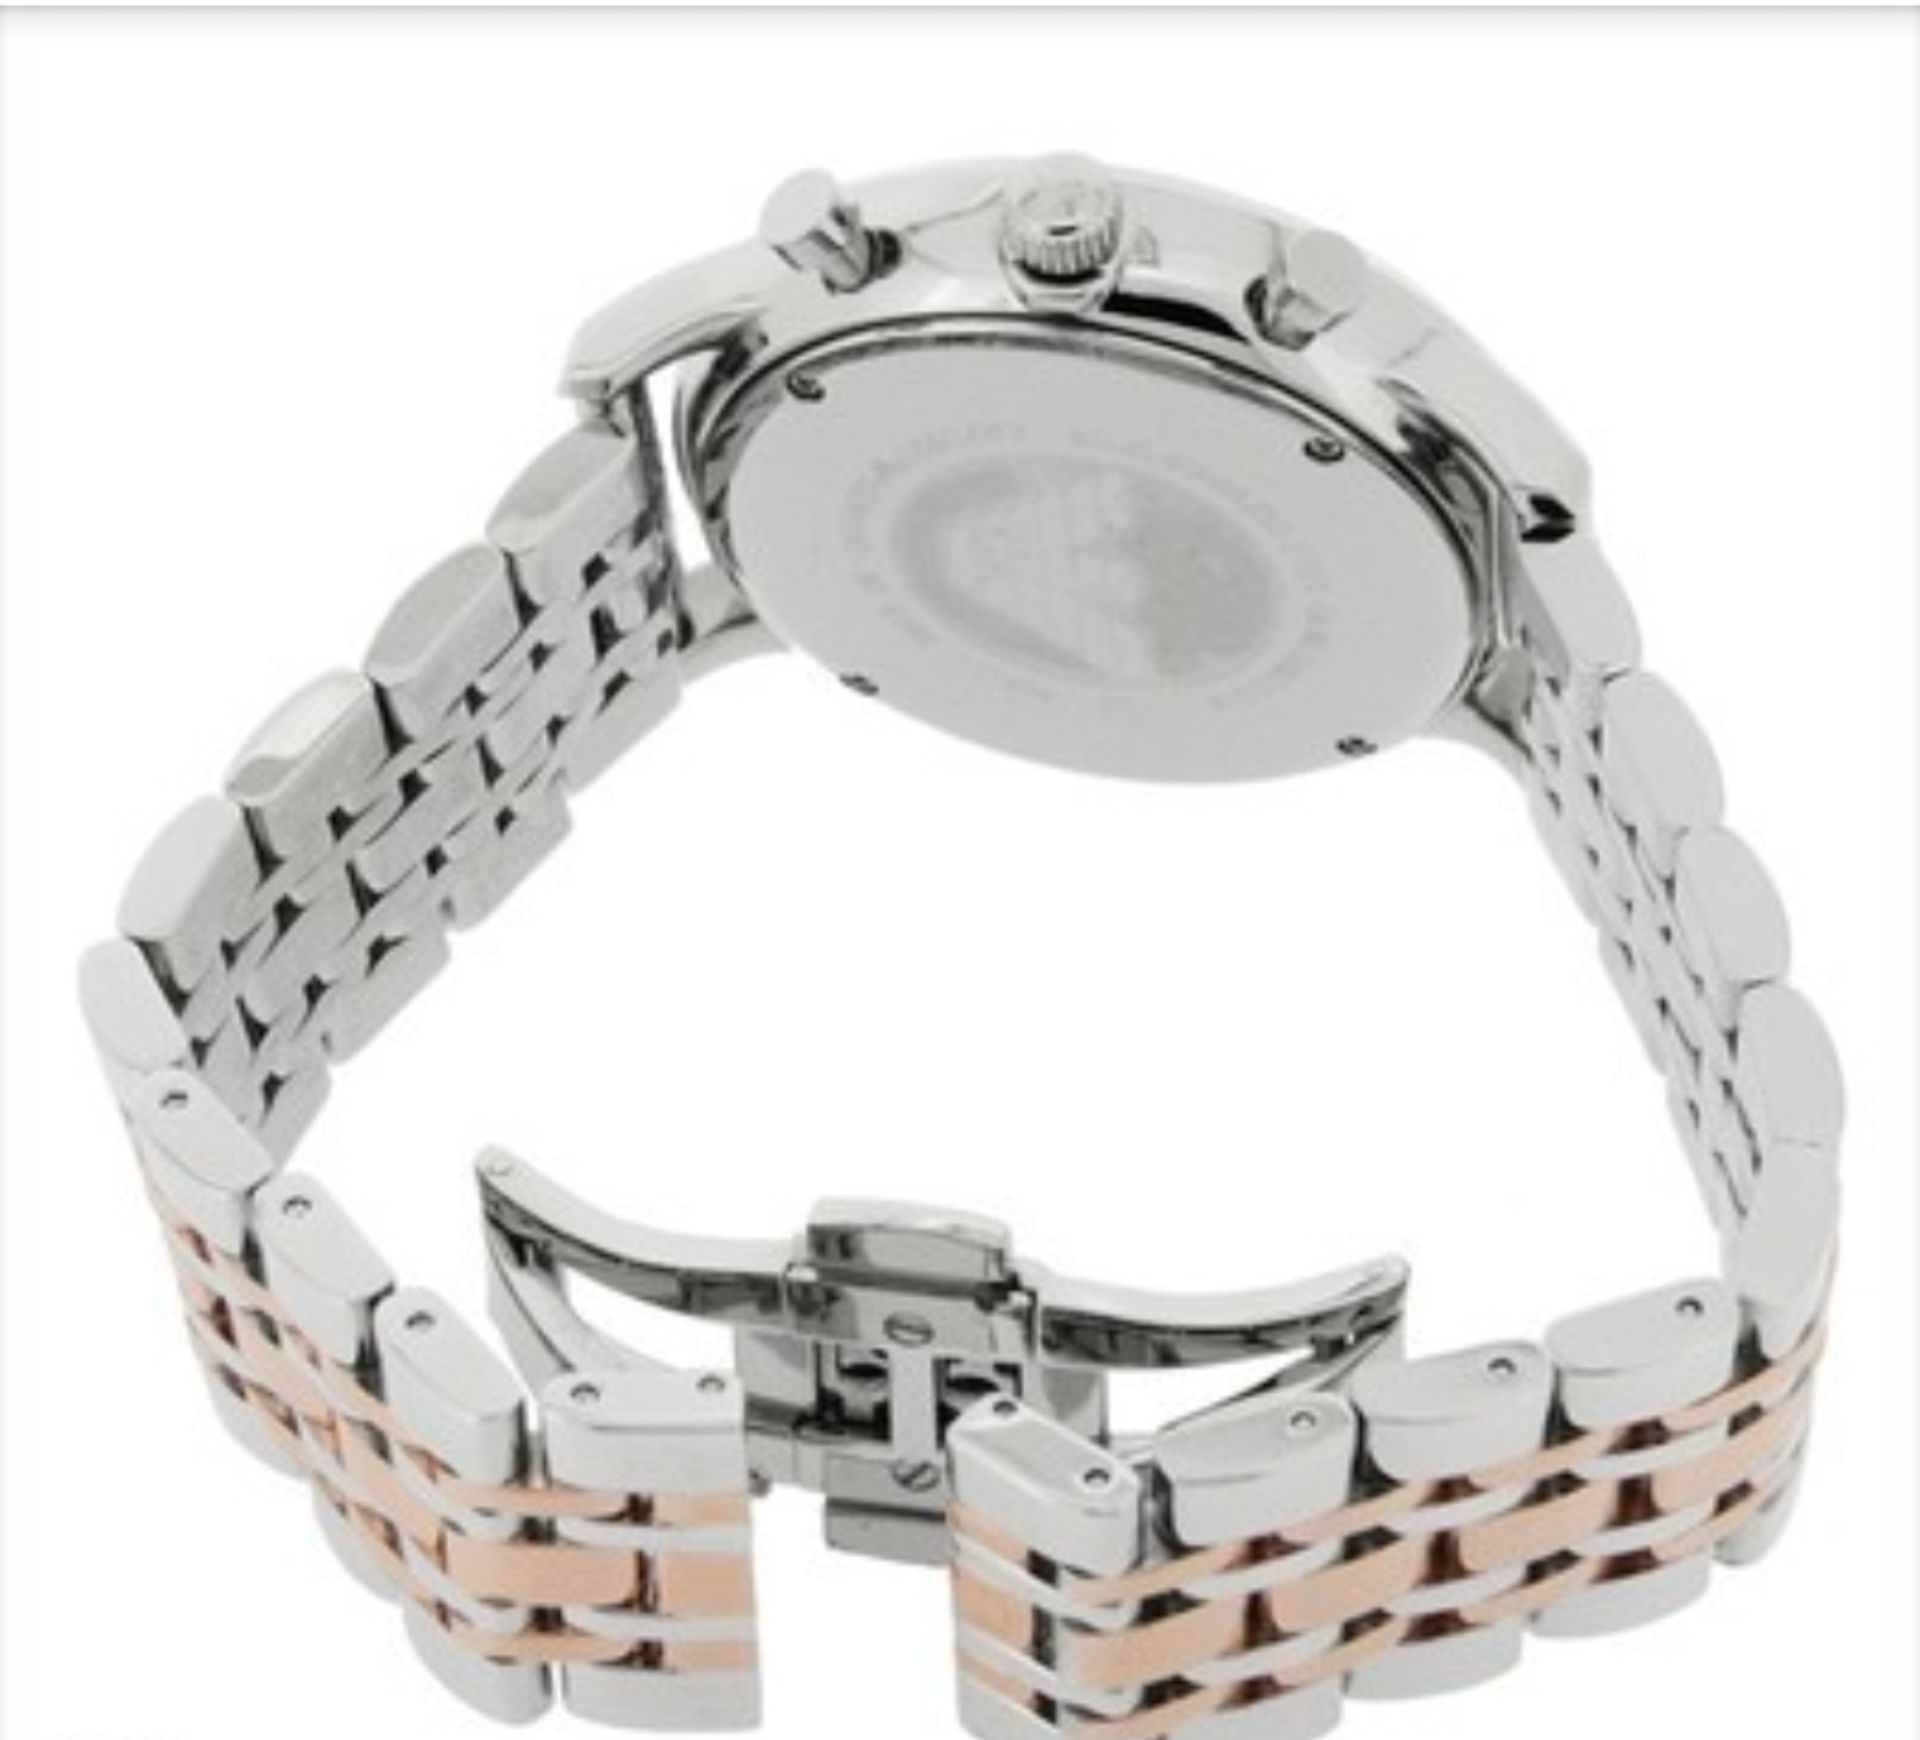 Emporio Armani AR0399 Men's Gianni Stainless Steel Bracelet Chronograph Watch - Image 4 of 4